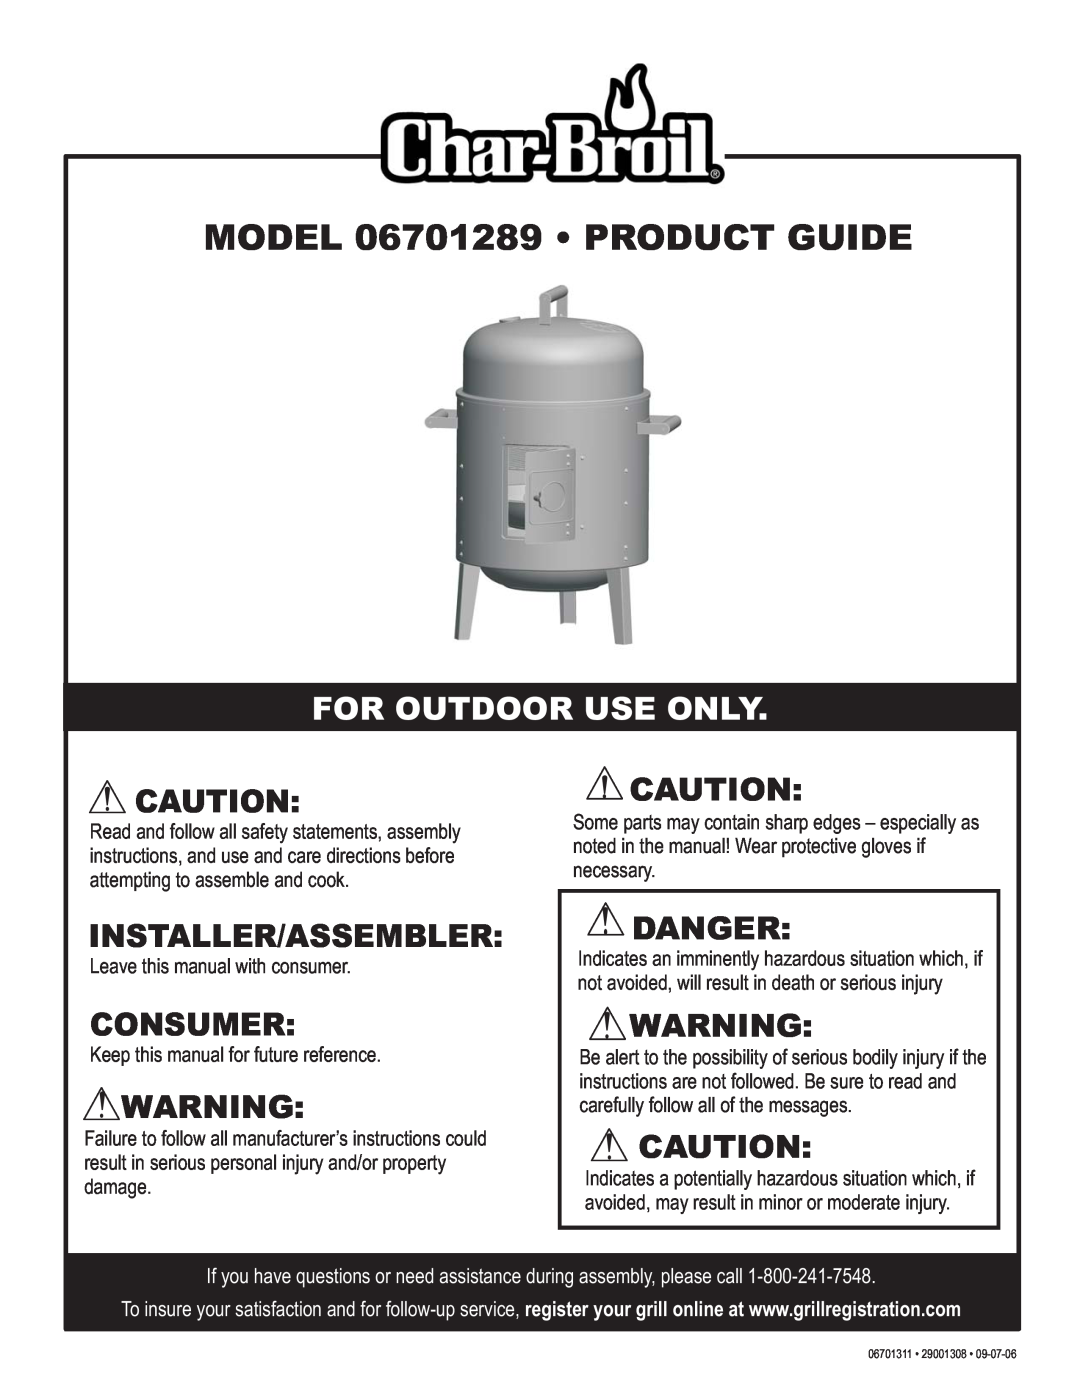 Char-Broil manual MODEL 06701289 PRODUCT GUIDE, For Outdoor Use Only, Installer/Assembler, Consumer, Danger 